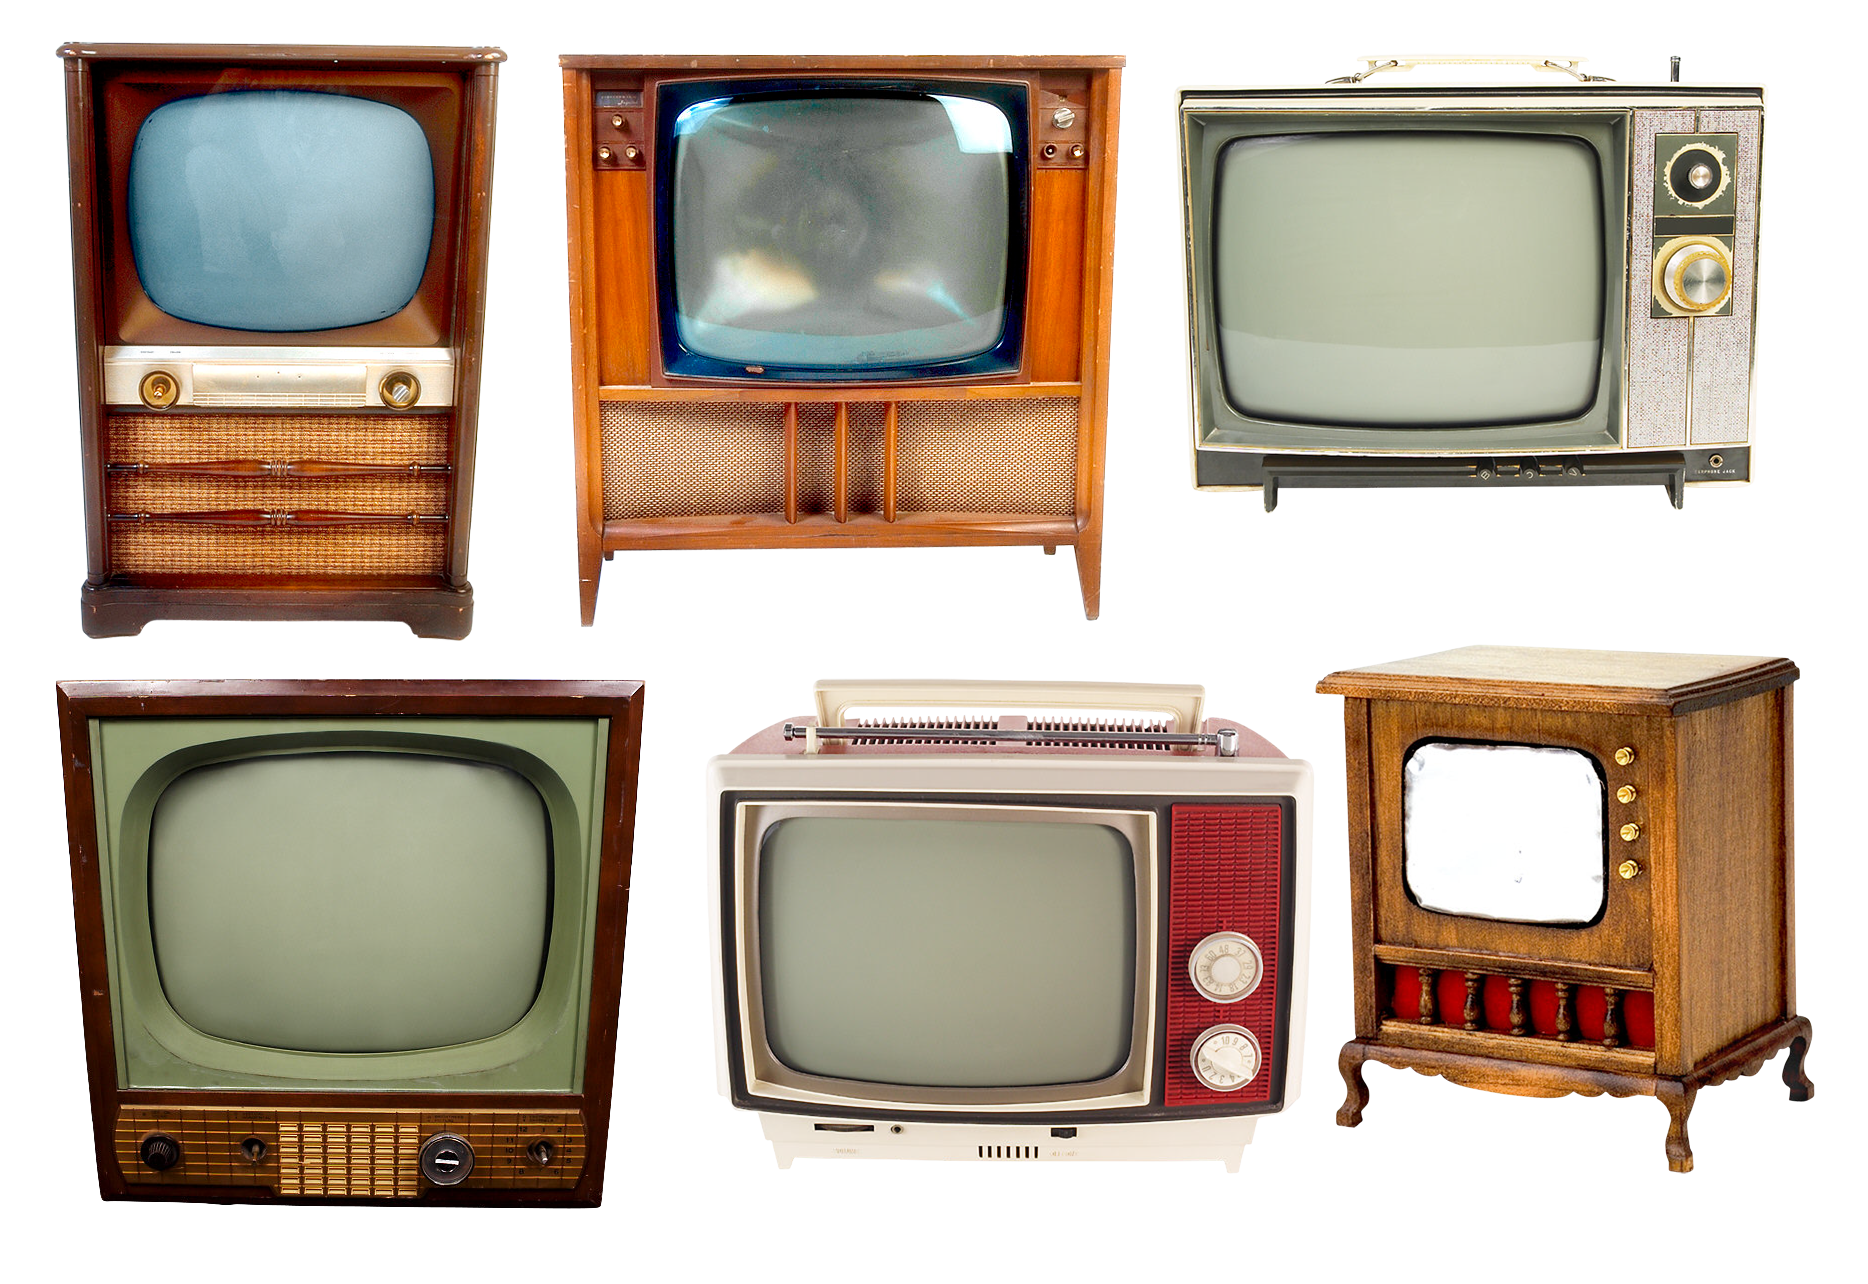 Телевизор 20 минут. Телевизор. Старинный телевизор. Телевизор 20 века. Эволюция телевизоров.